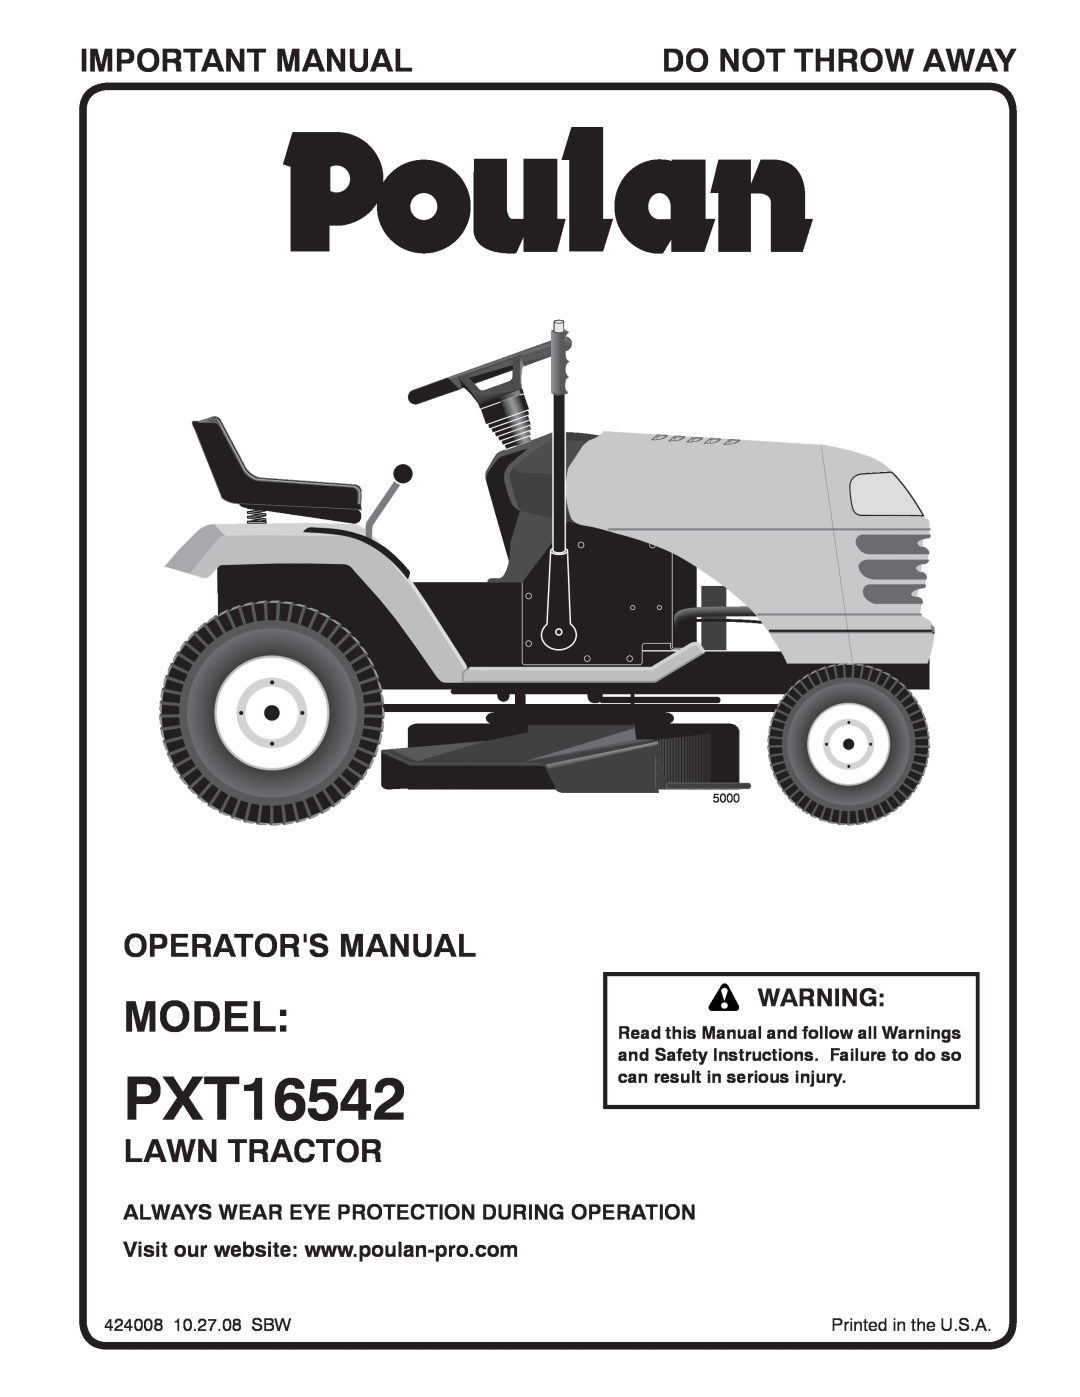 Poulan 424008 manual Important Manual, Do Not Throw Away, Operators Manual, Lawn Tractor, PXT16542, Model, 5000 